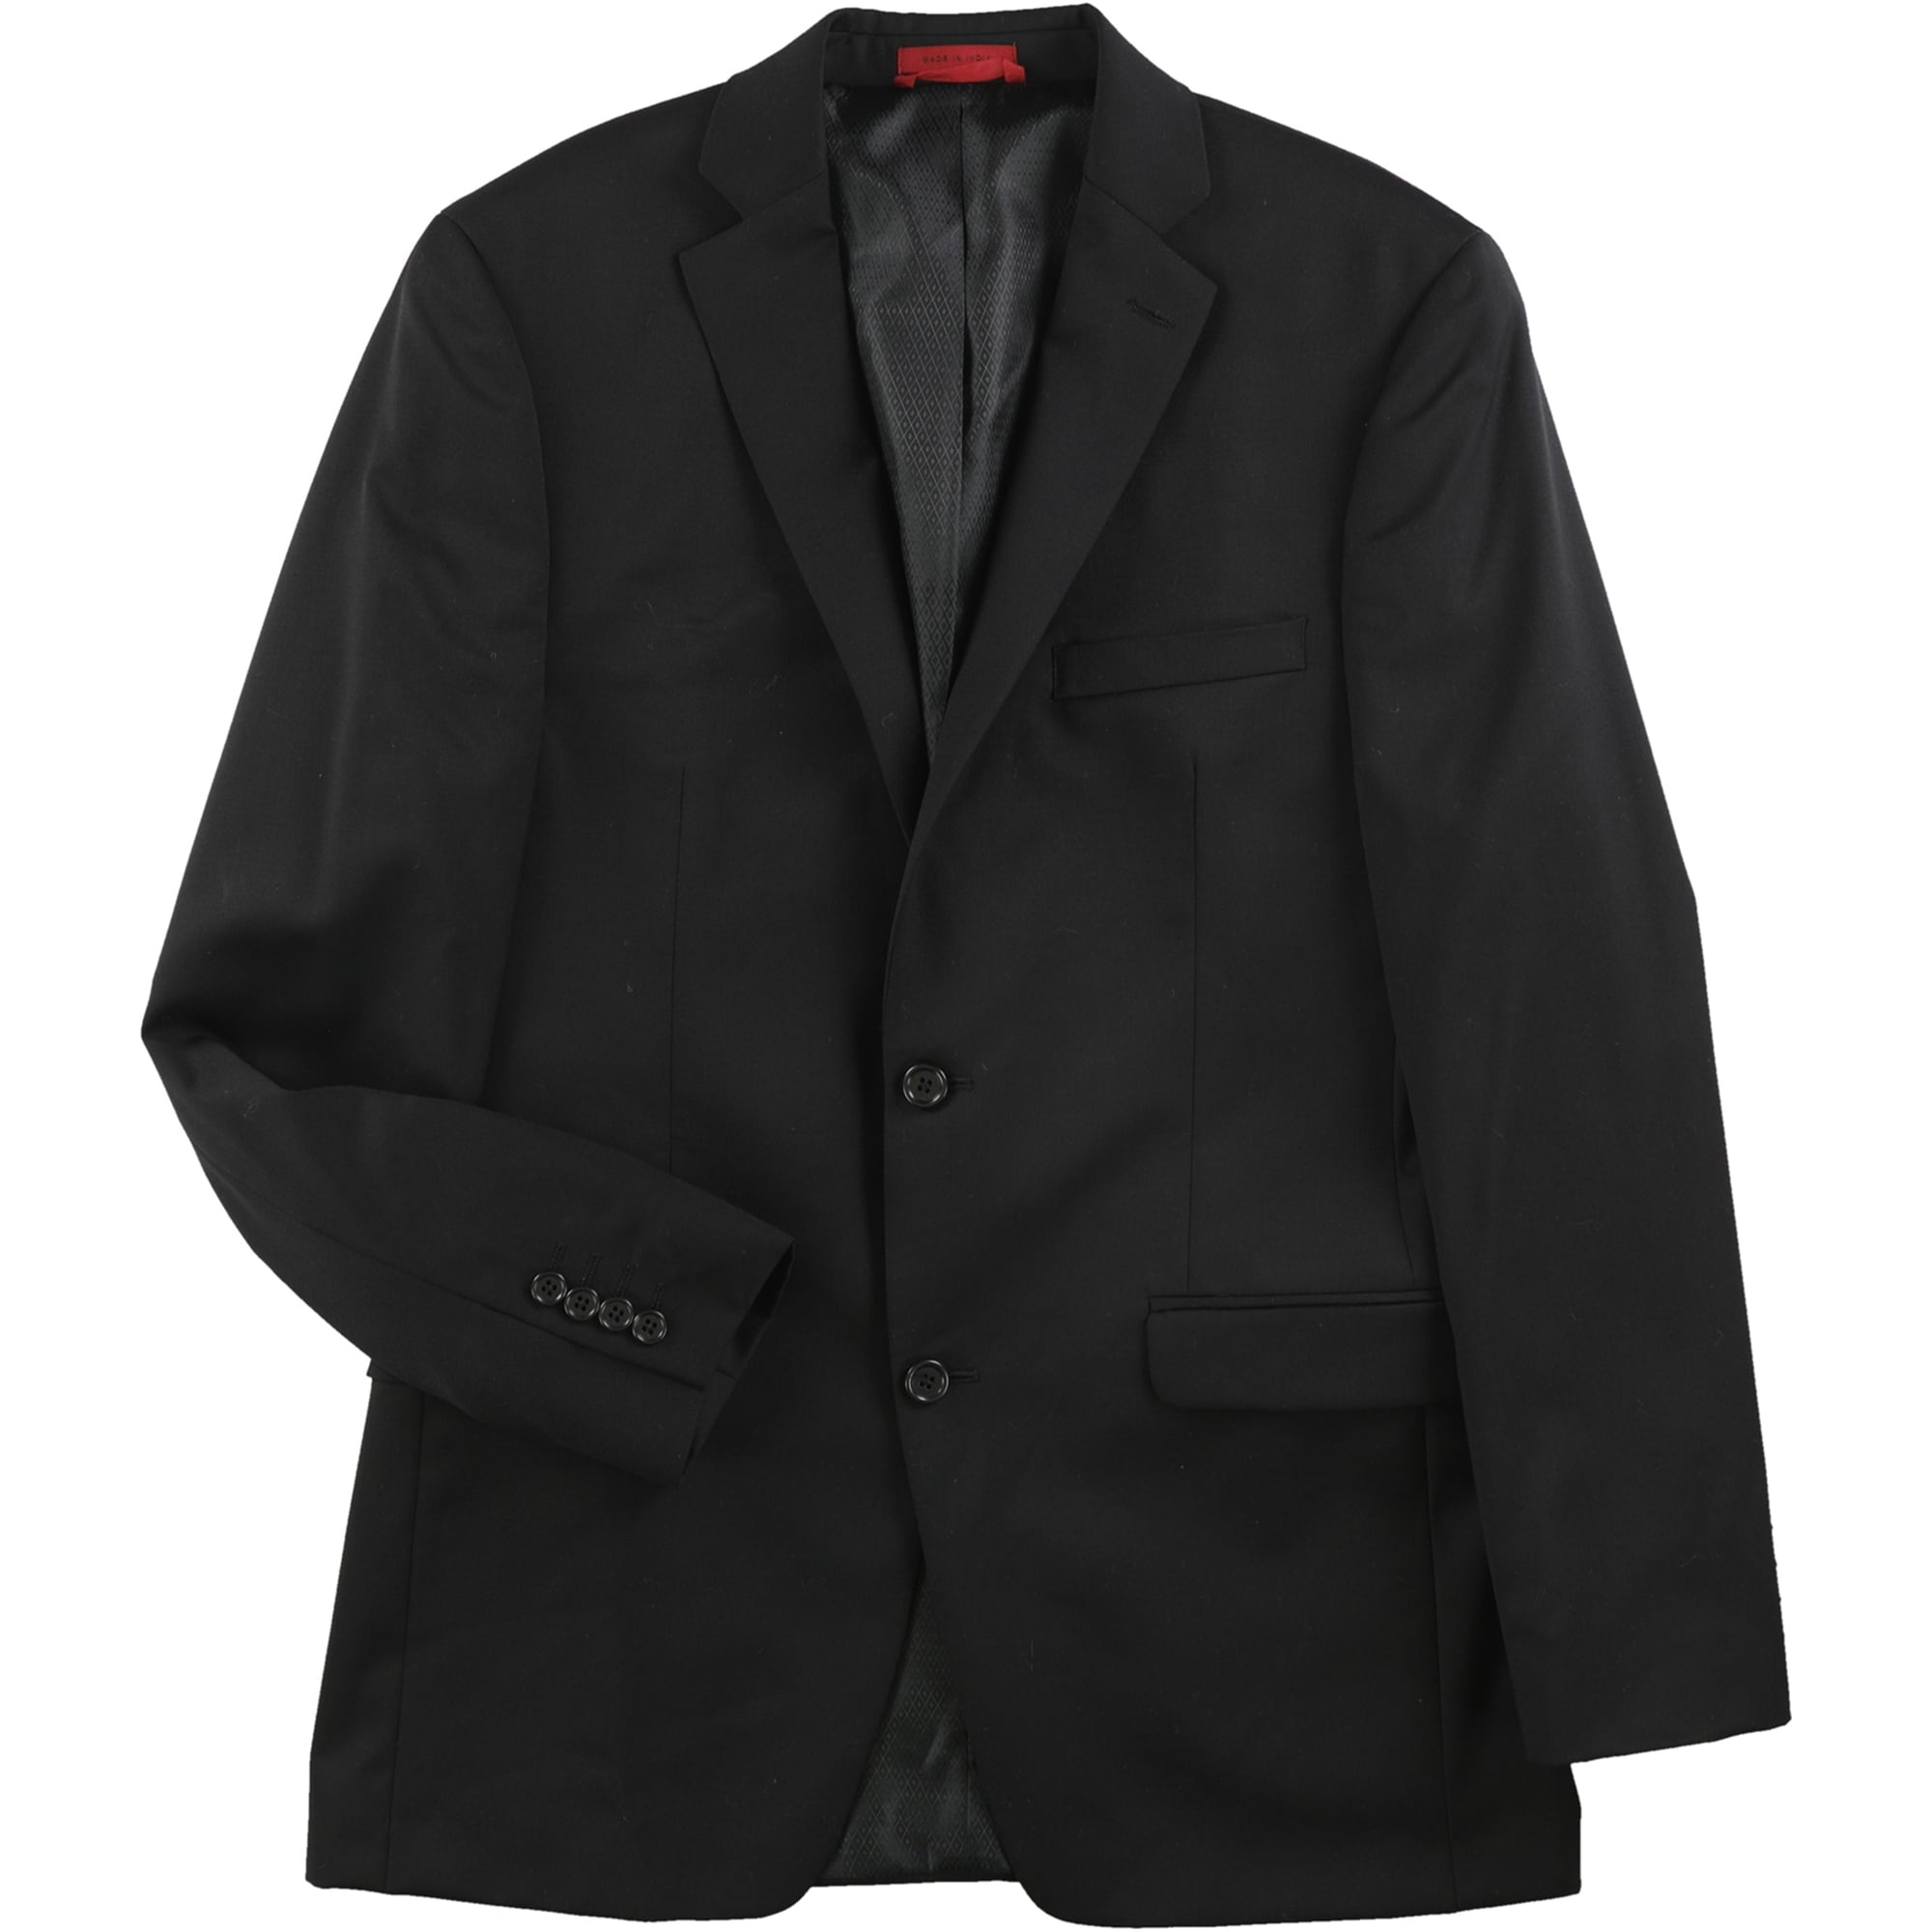 Alfani RED Slim Fit Two Button Black Striped 100% Wool Blazer Sportcoat 